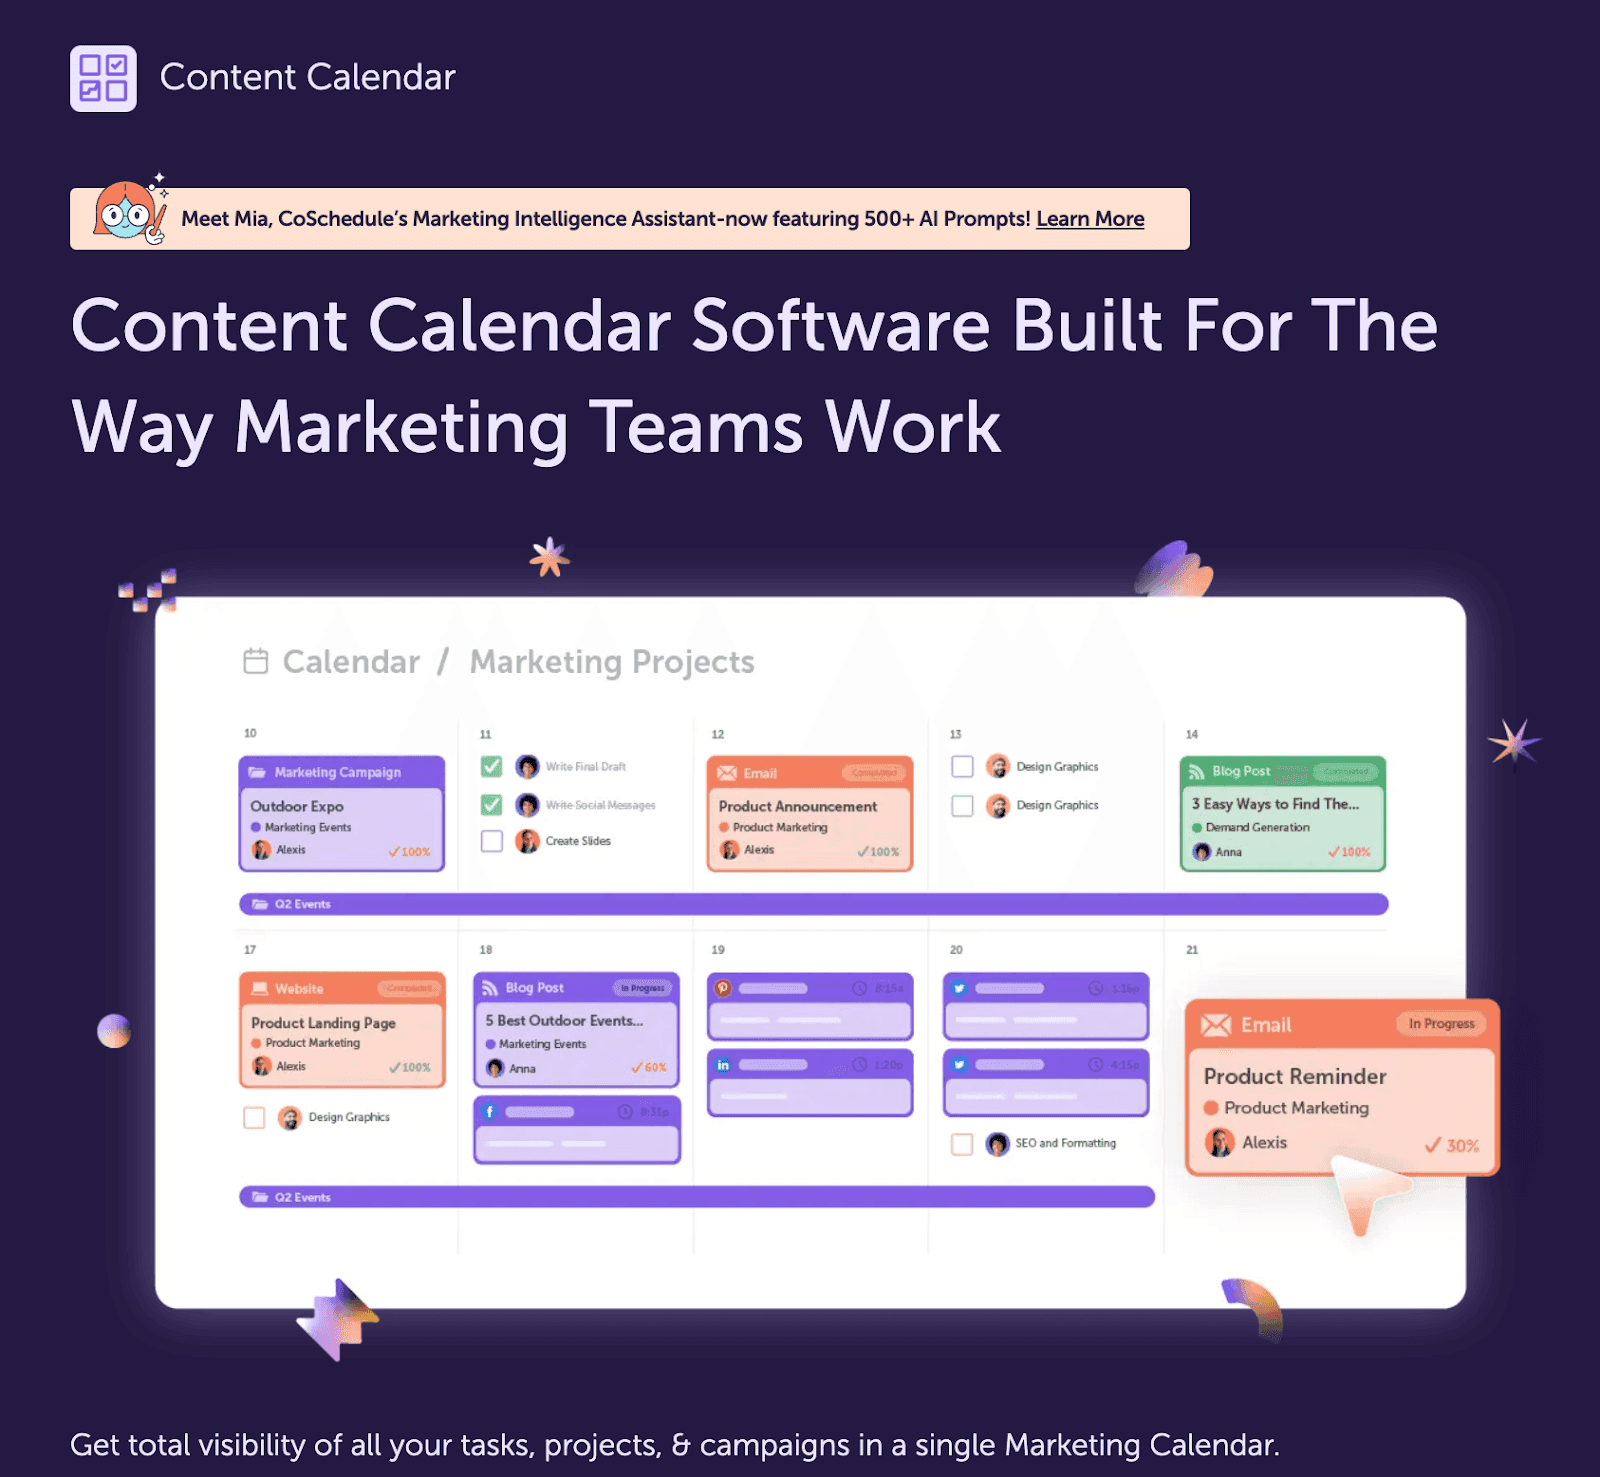 Content calendar software built for the way marketing teams work